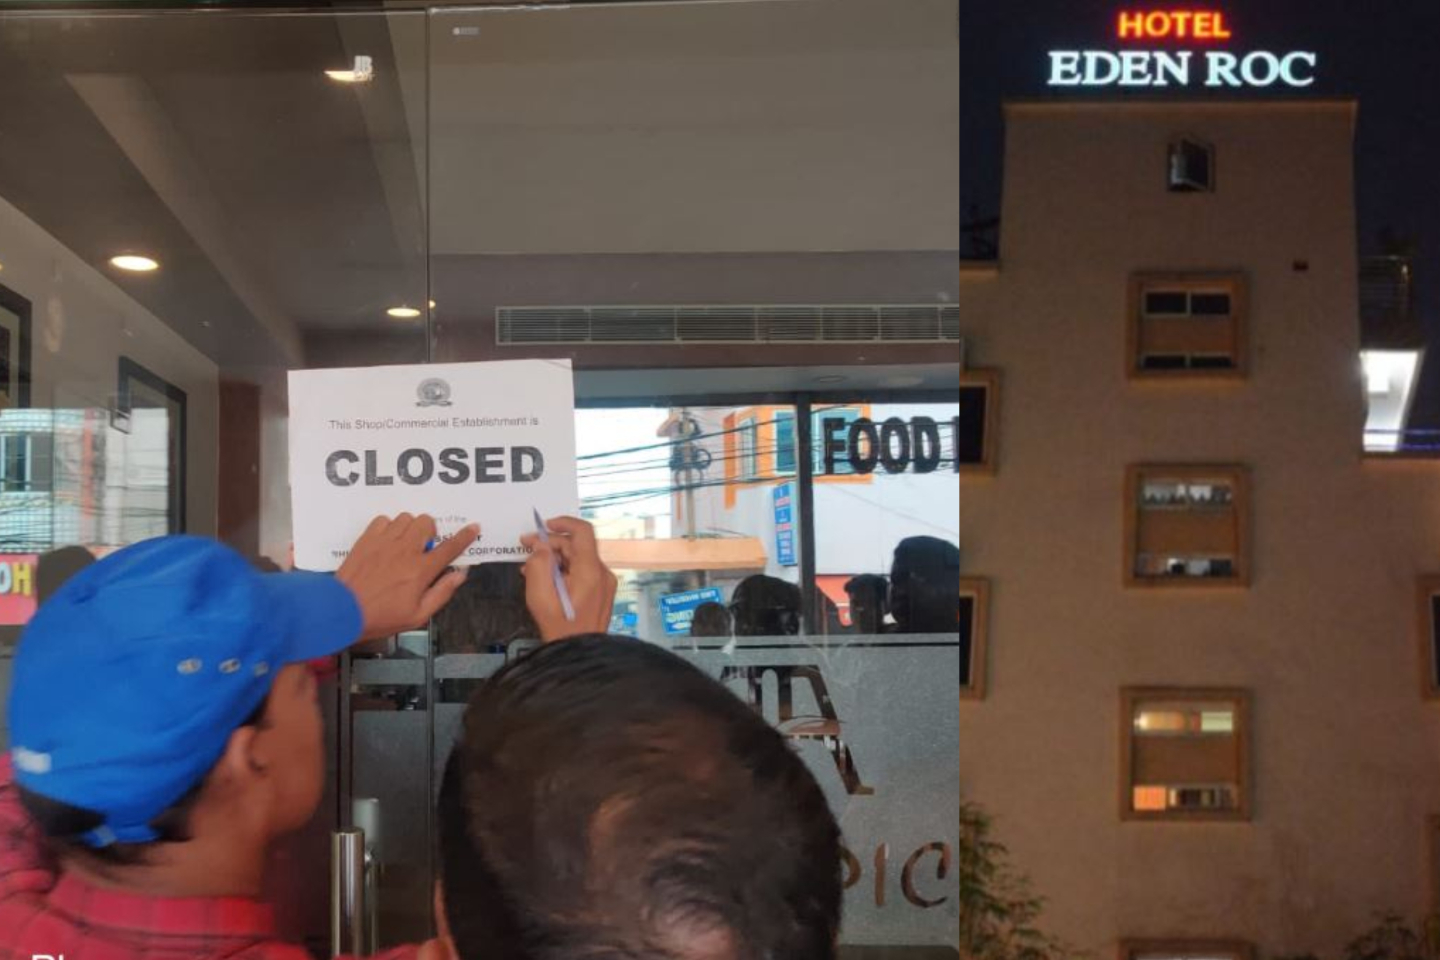 BMC Closed Hotel Eden Roc At Station Bazar For Poor Station